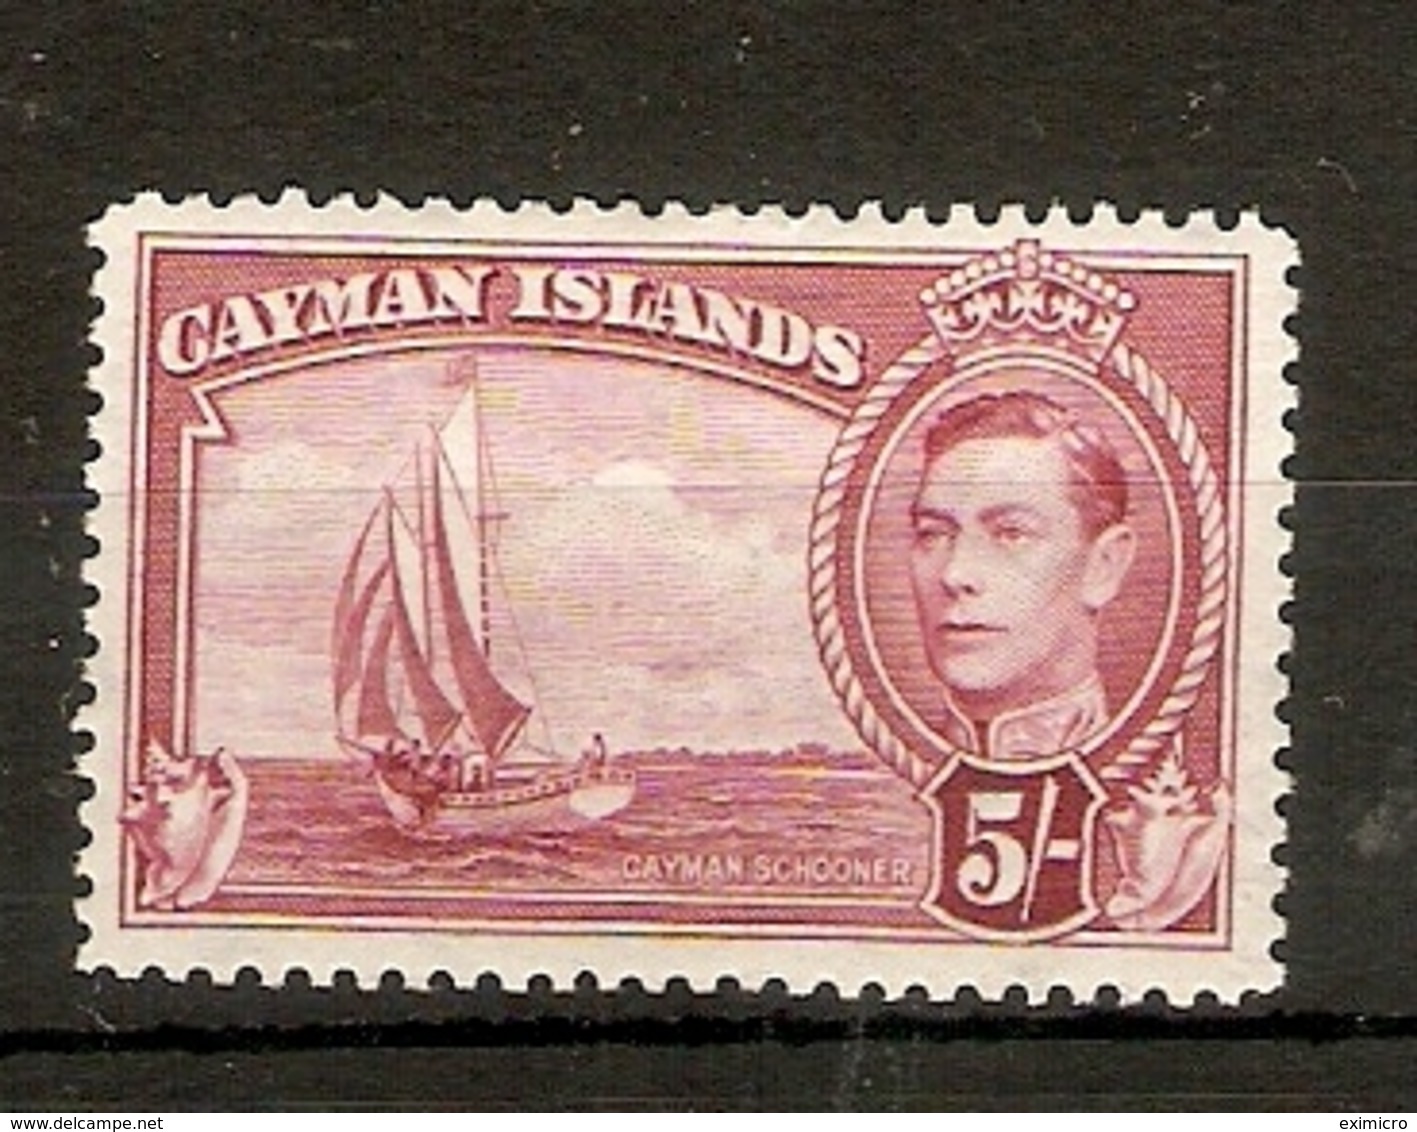 CAYMAN ISLANDS 1938 5s CARMINE - LAKE SG 125 LIGHTLY MOUNTED MINT Cat £45 - Cayman Islands